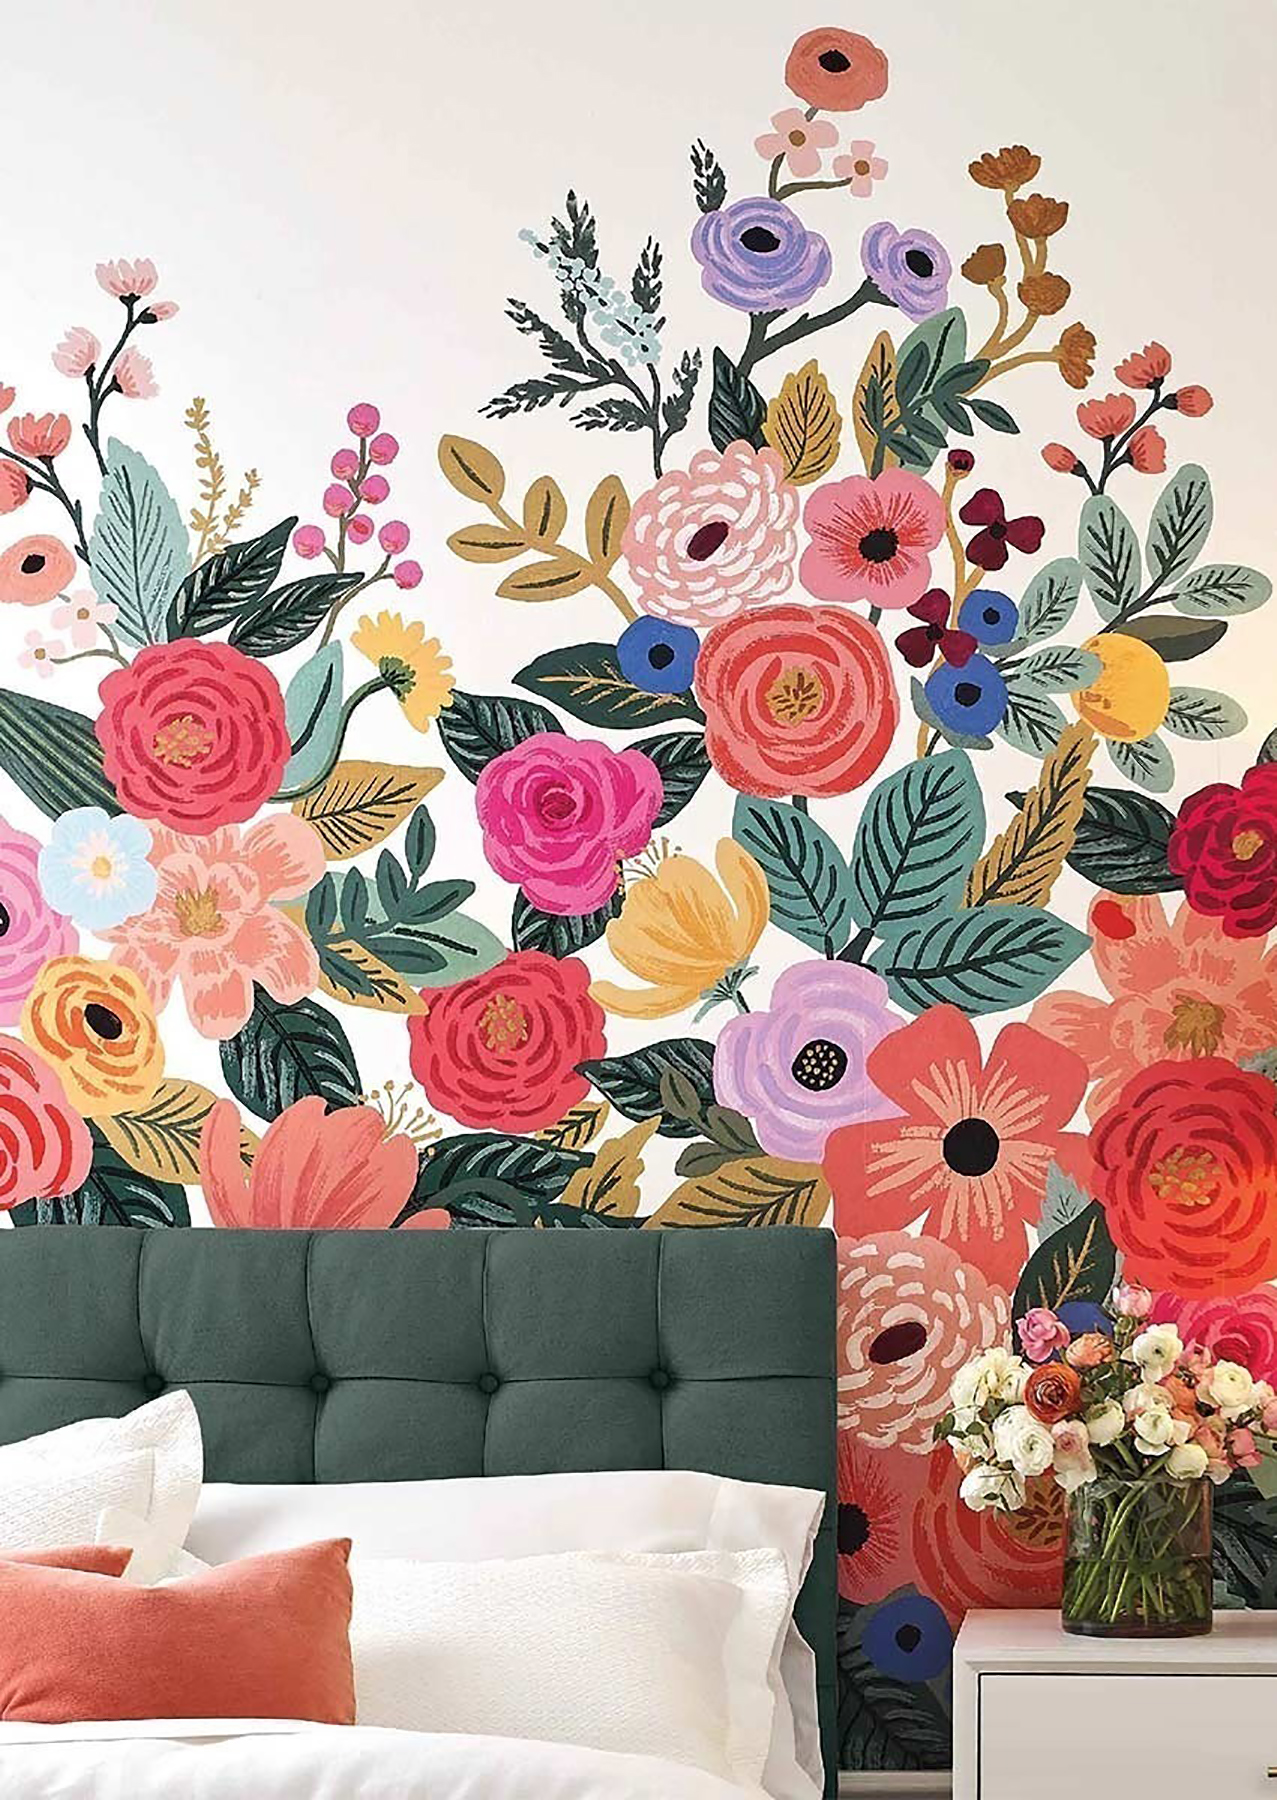 Wall mural Flower Garden rose | Wallpaper from the 70s